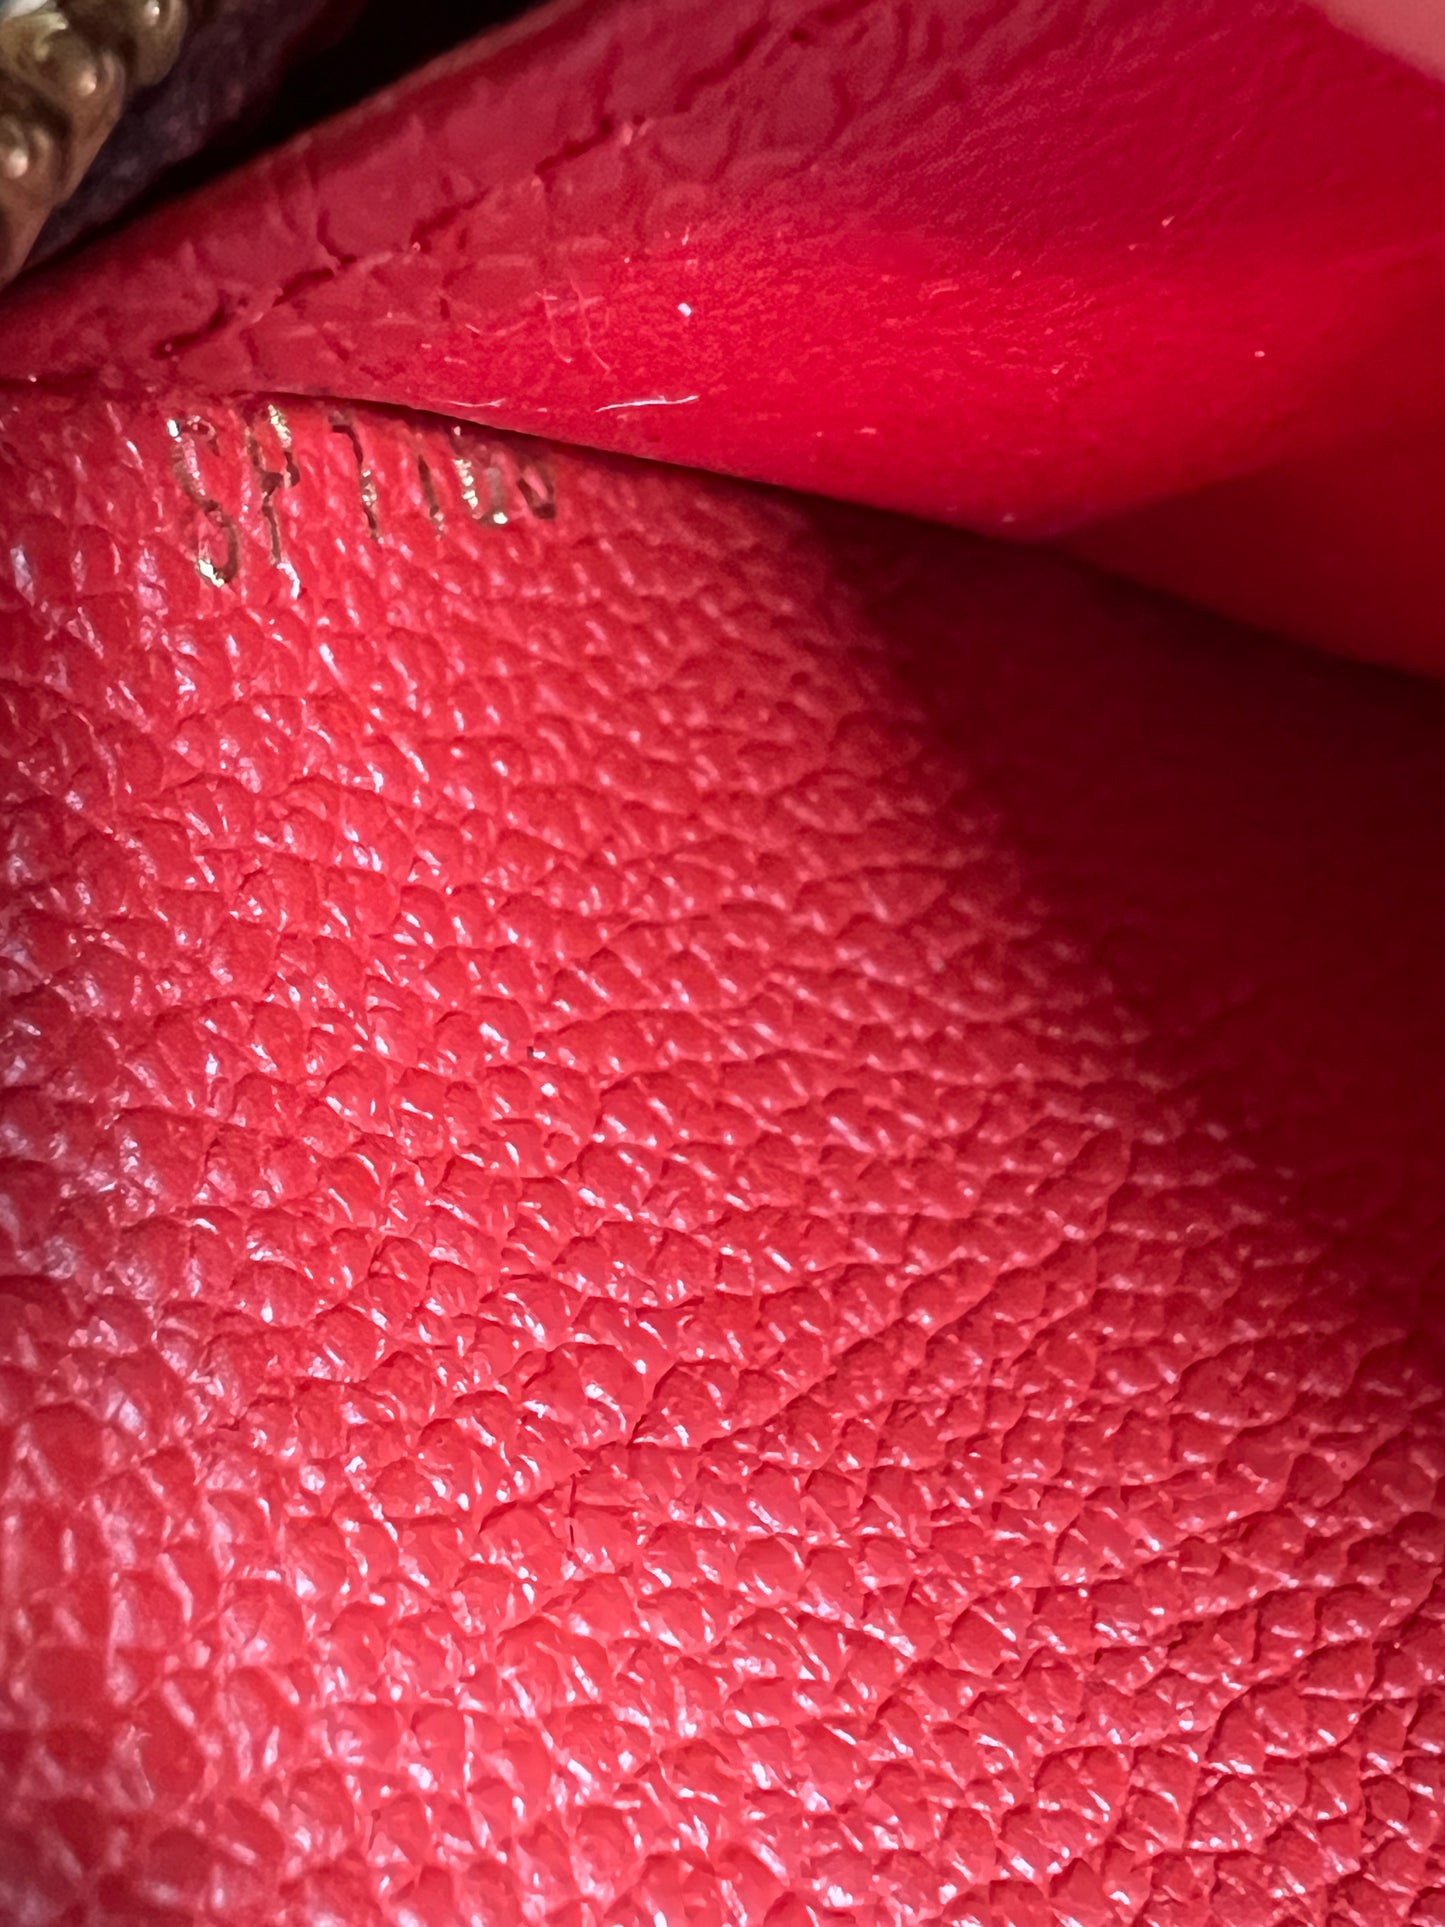 Louis Vuitton Red Empreinte Leather Zippy Wallet